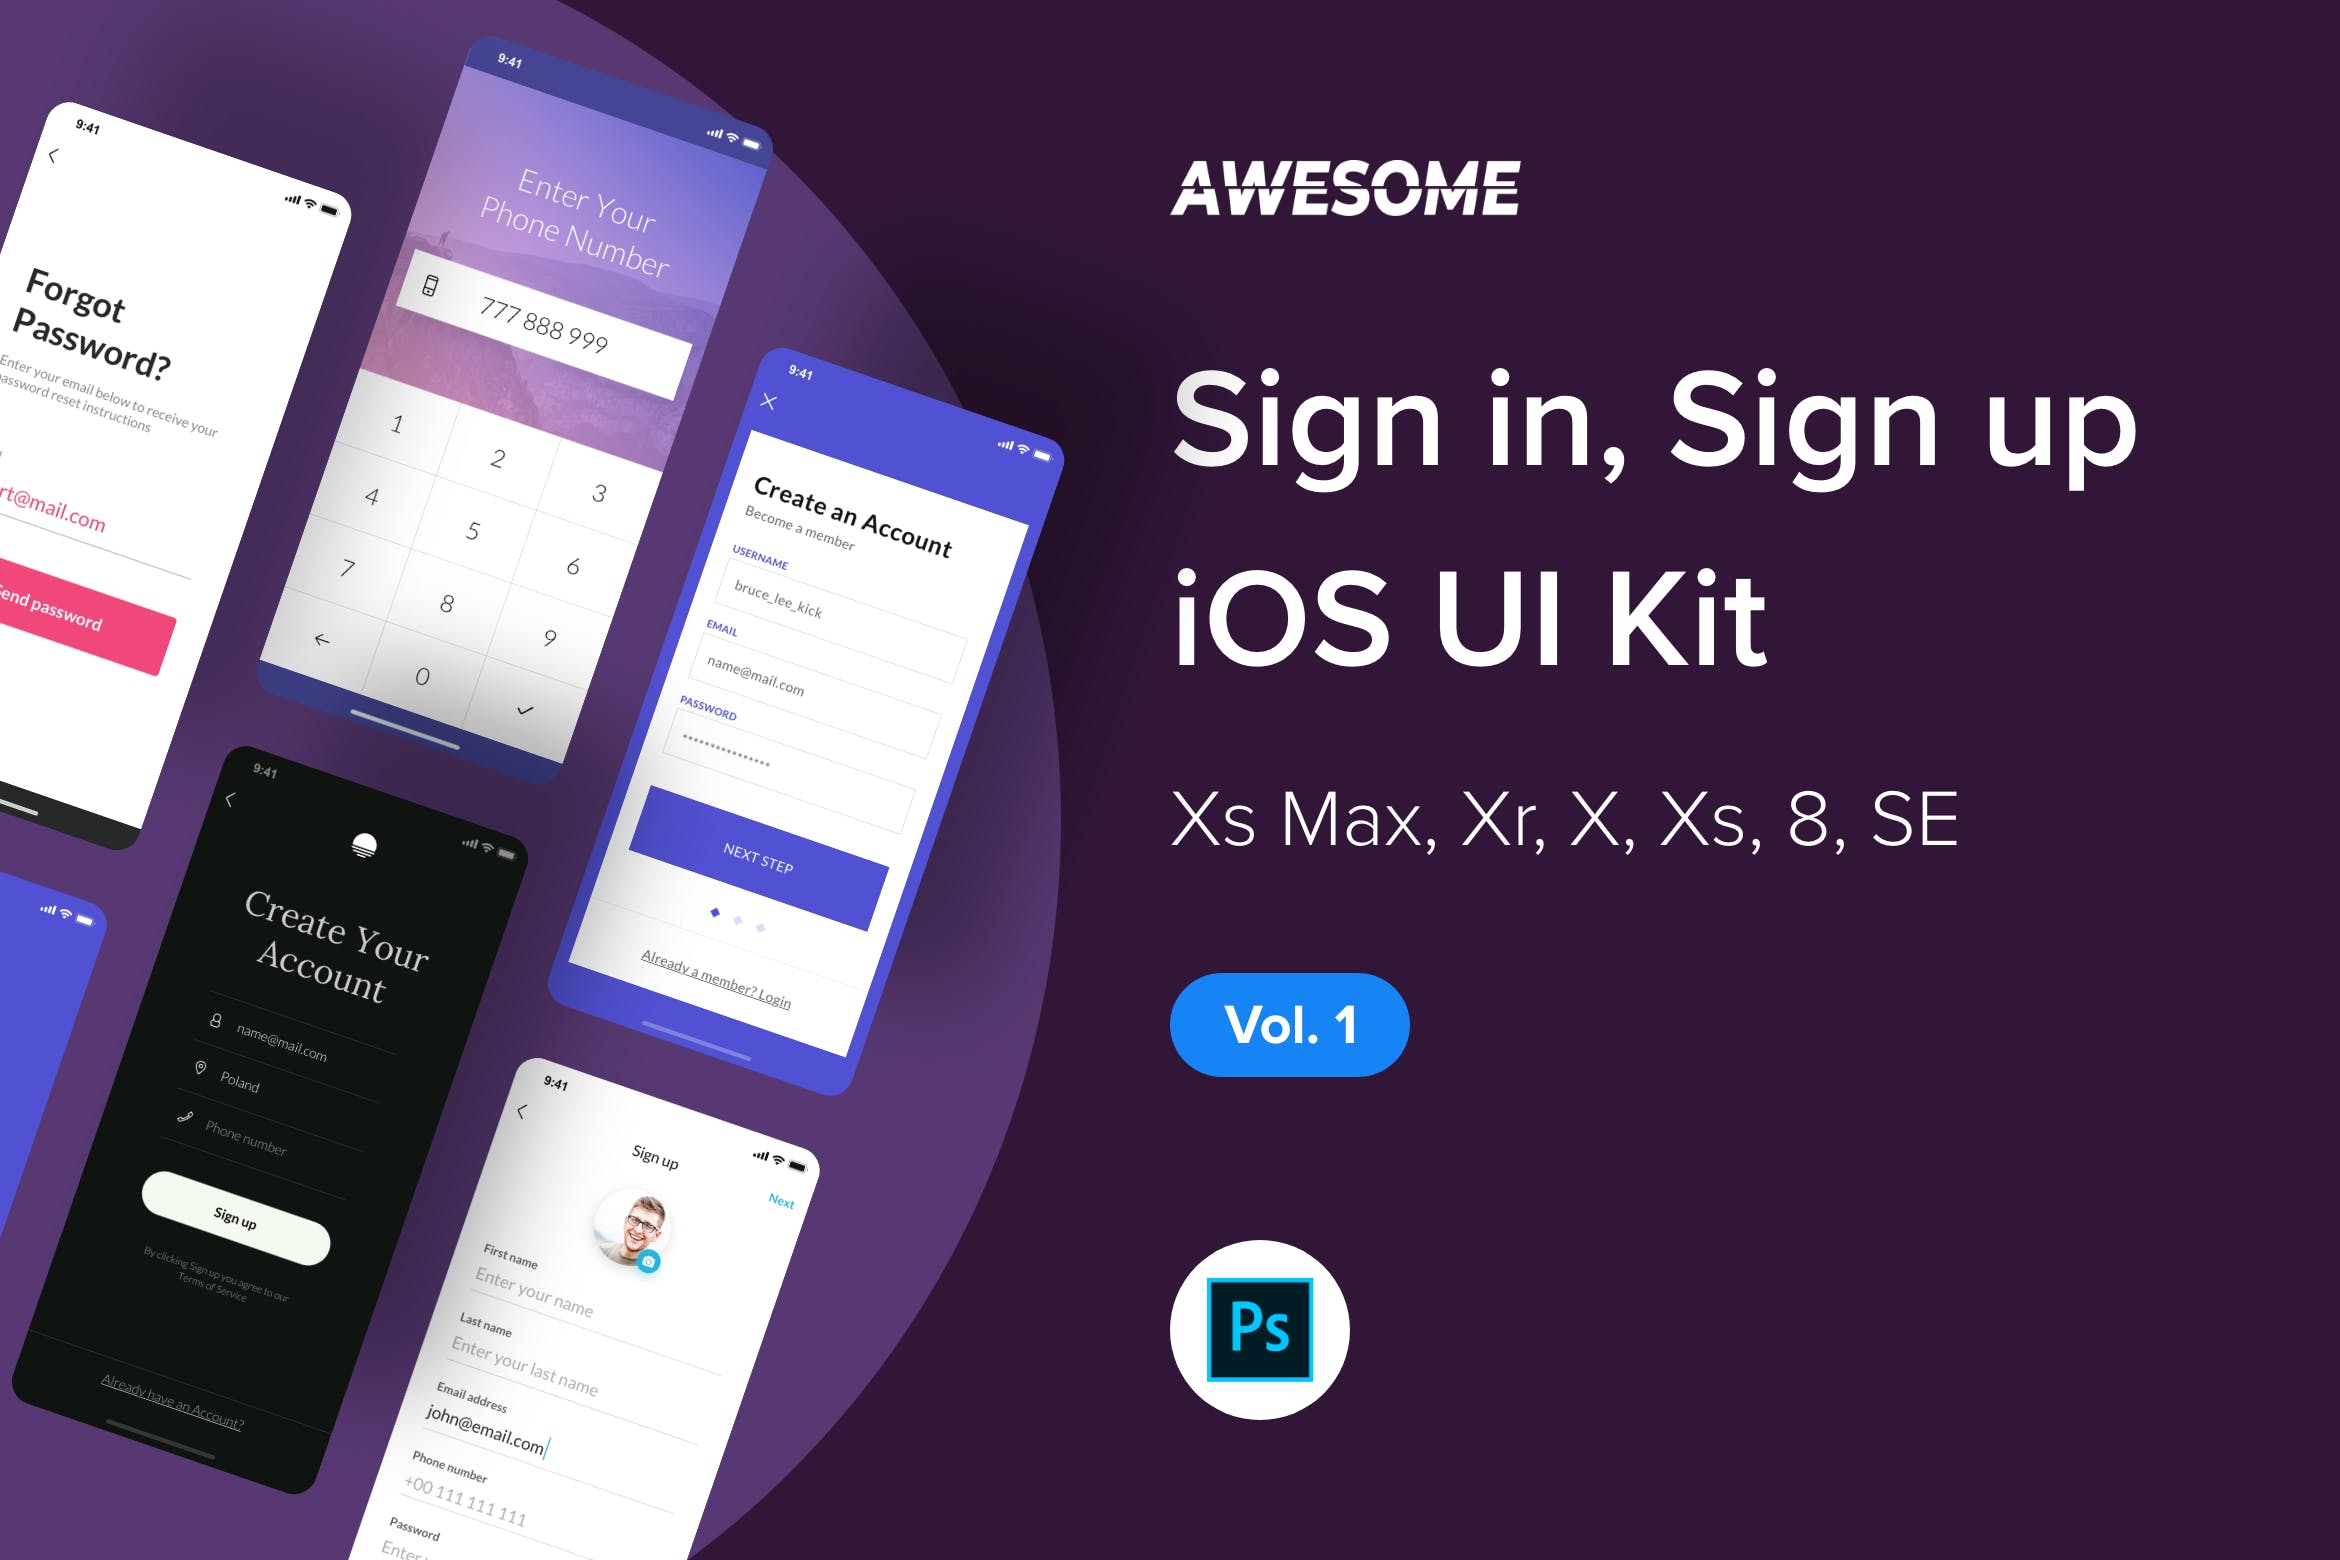 iOS应用APP注册登录交互界面设计UI套件PSD模板v1 Awesome iOS UI Kit – Sign in, Sign up Vol. 1 (PSD)插图